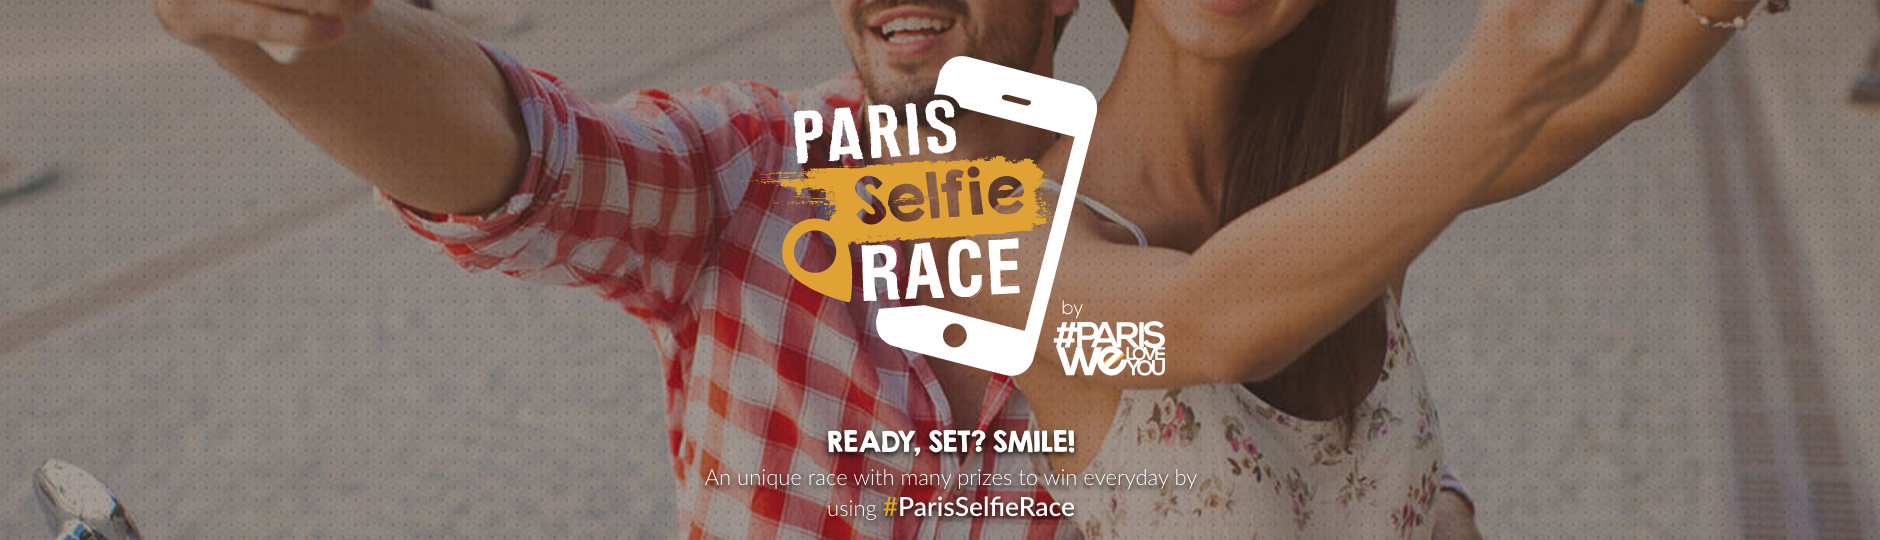 parisweloveyou selfie race paris